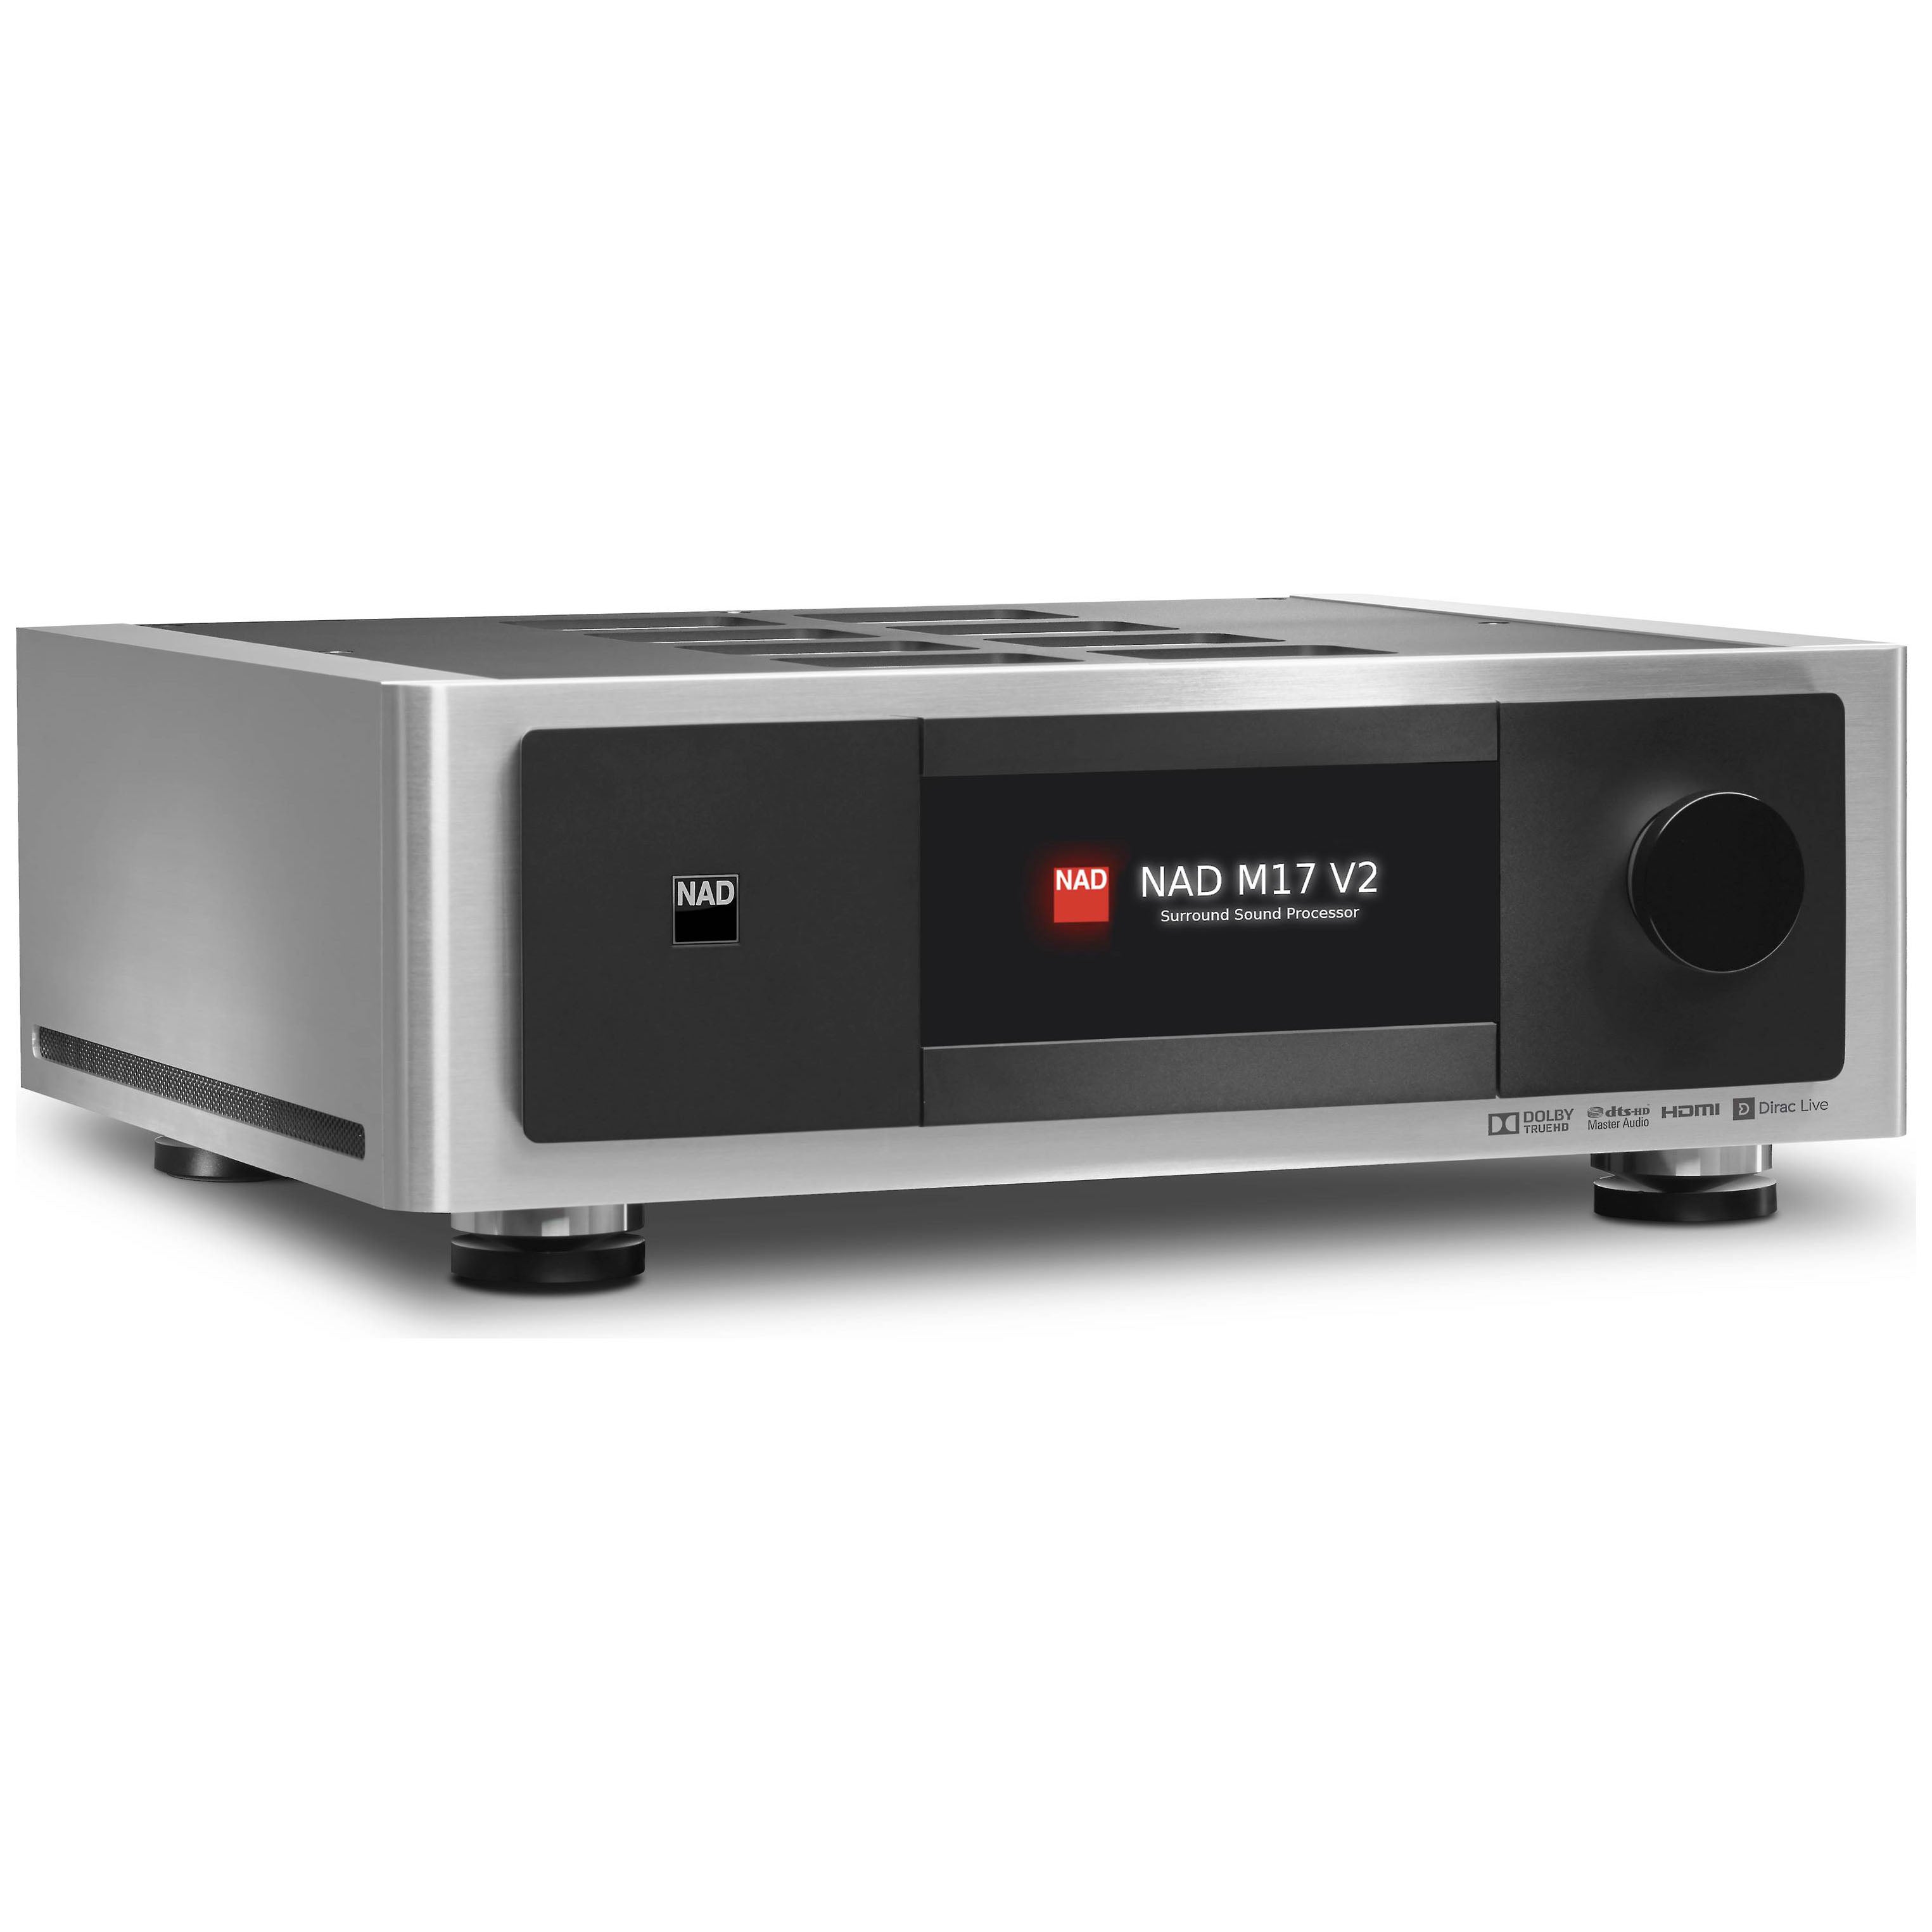 NAD M17 V2 Surround Sound Preamplifier Processor